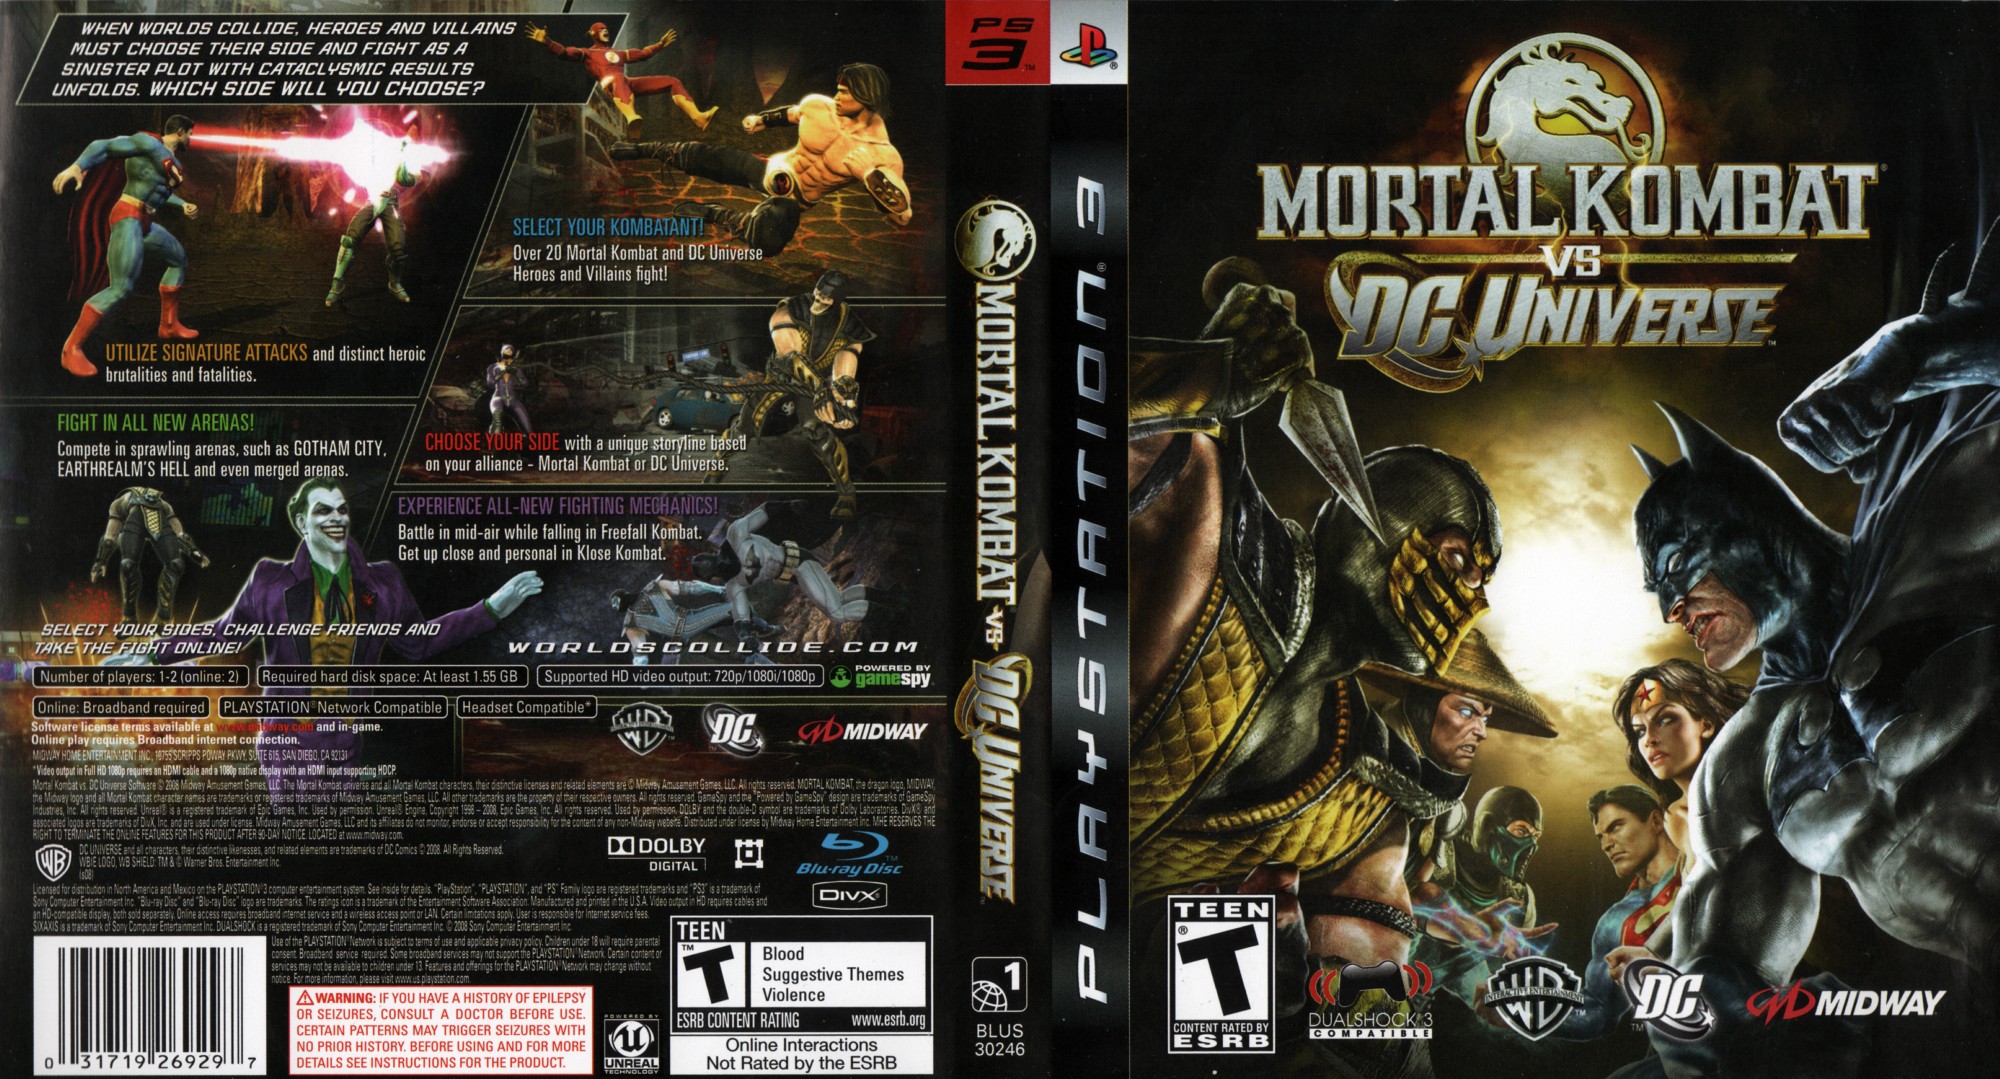 Mortal Kombat Vs. DC Universe #23